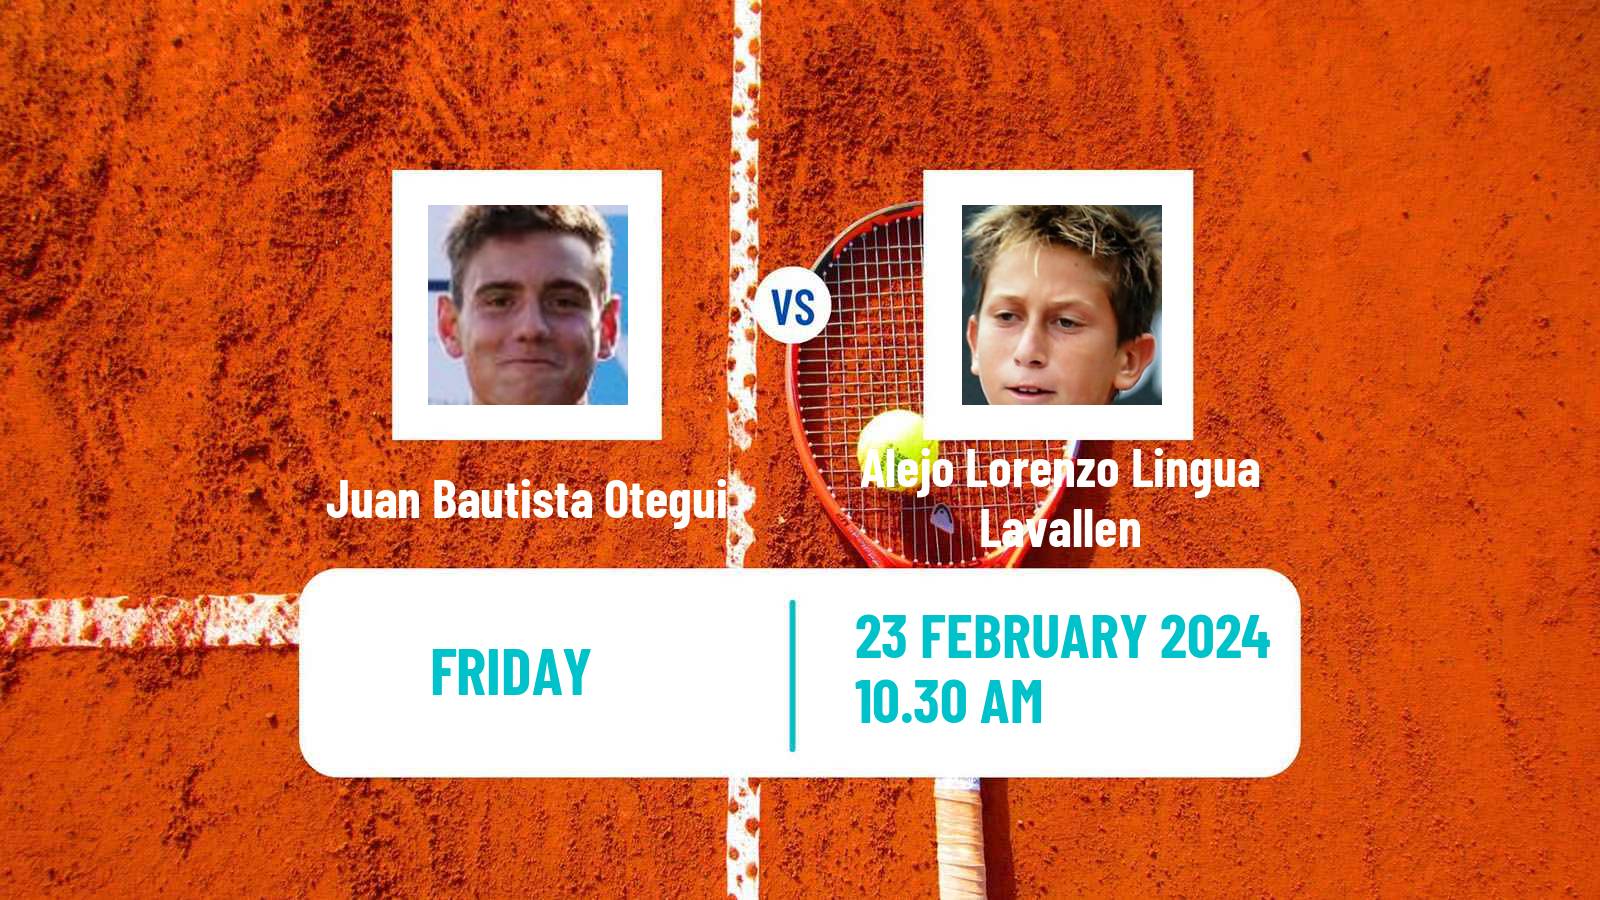 Tennis ITF M15 Villa Maria Men Juan Bautista Otegui - Alejo Lorenzo Lingua Lavallen